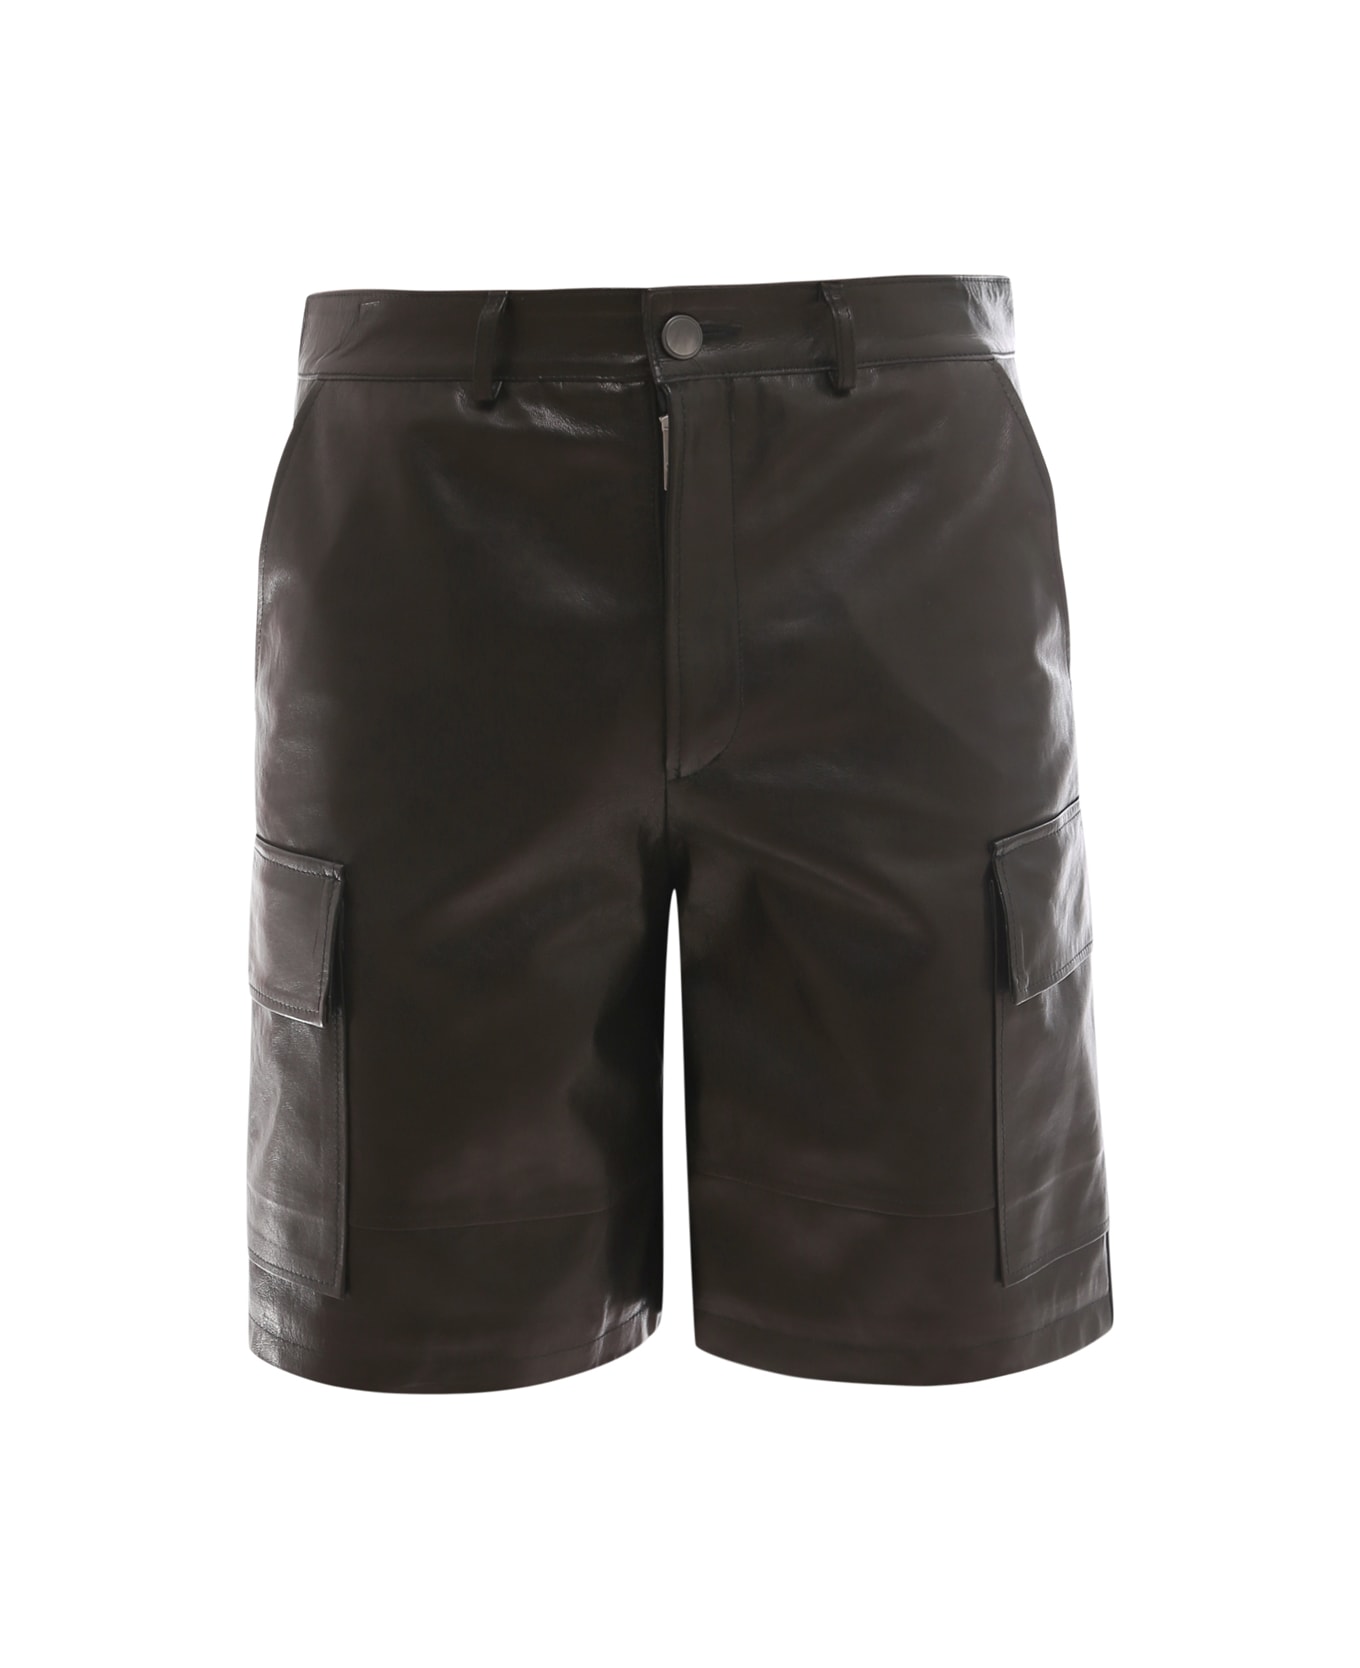 DFour Bermuda Shorts - Black ショートパンツ